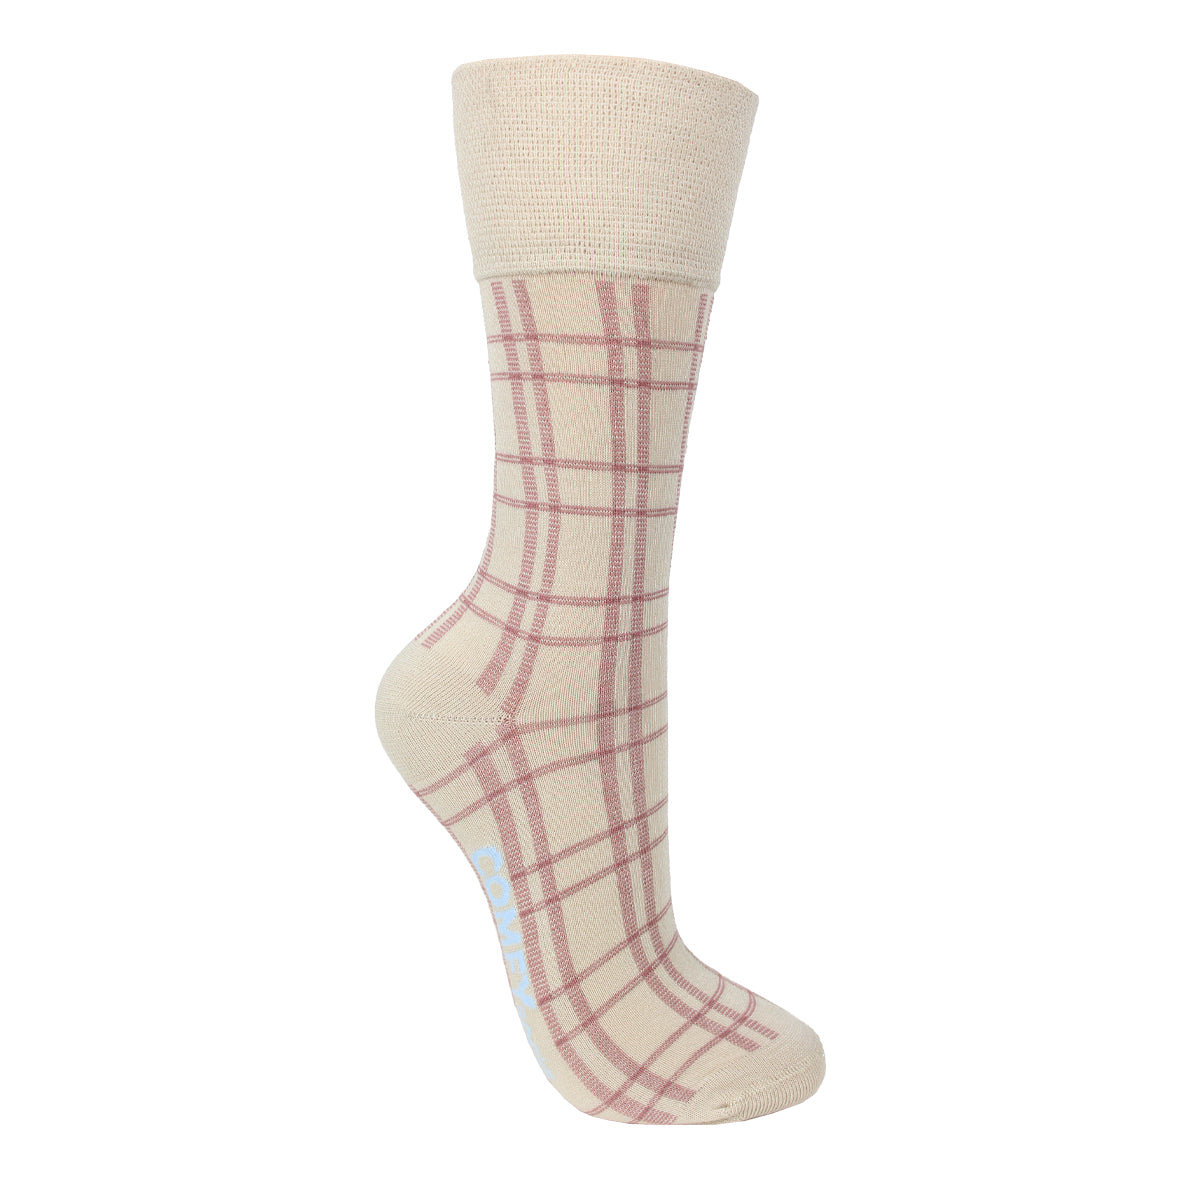 Comfy Socks - Calcetin Bamboo Escocés Largo 3/4